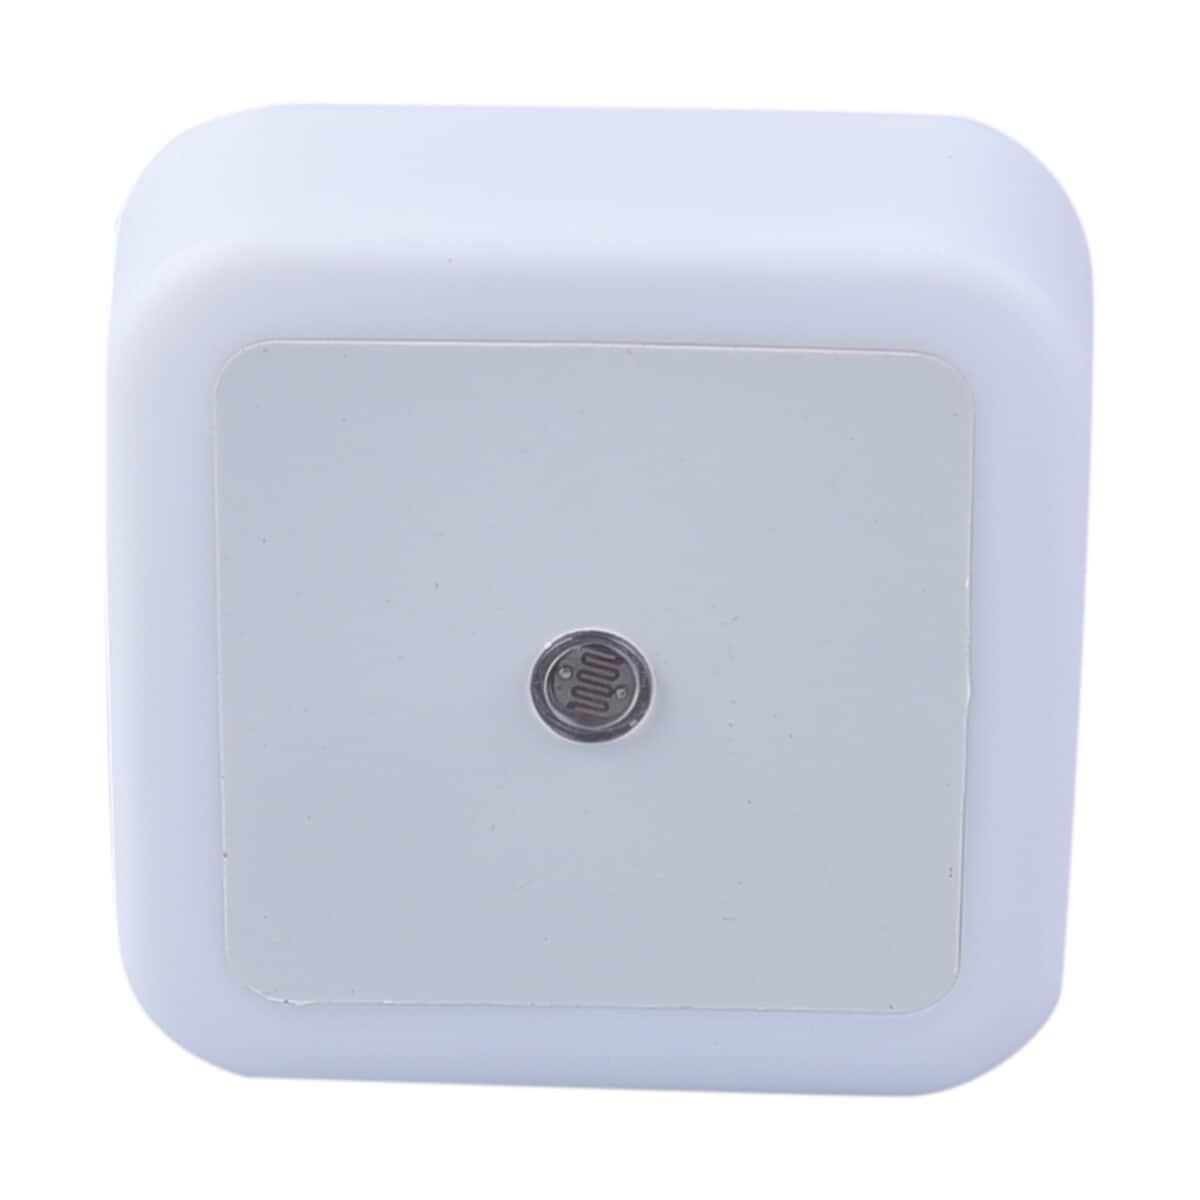 Set of 6 White Square Plug-in Night LED Light with Sensitive Light Sensor (2.36"x2.36") image number 0